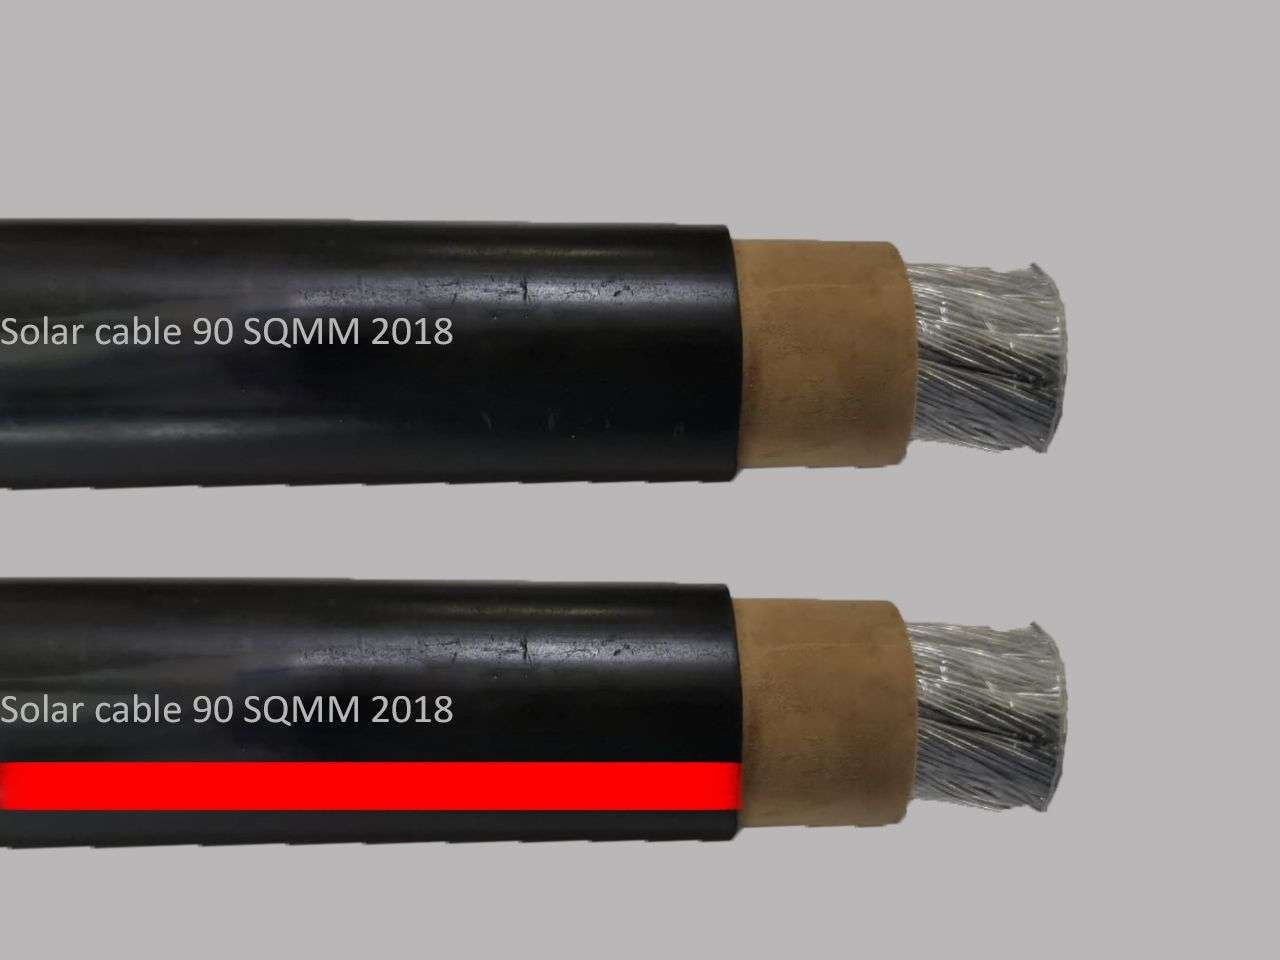 en-certified-dc-solar-cable-95-sqm-500mtr-drum-blk.jpg